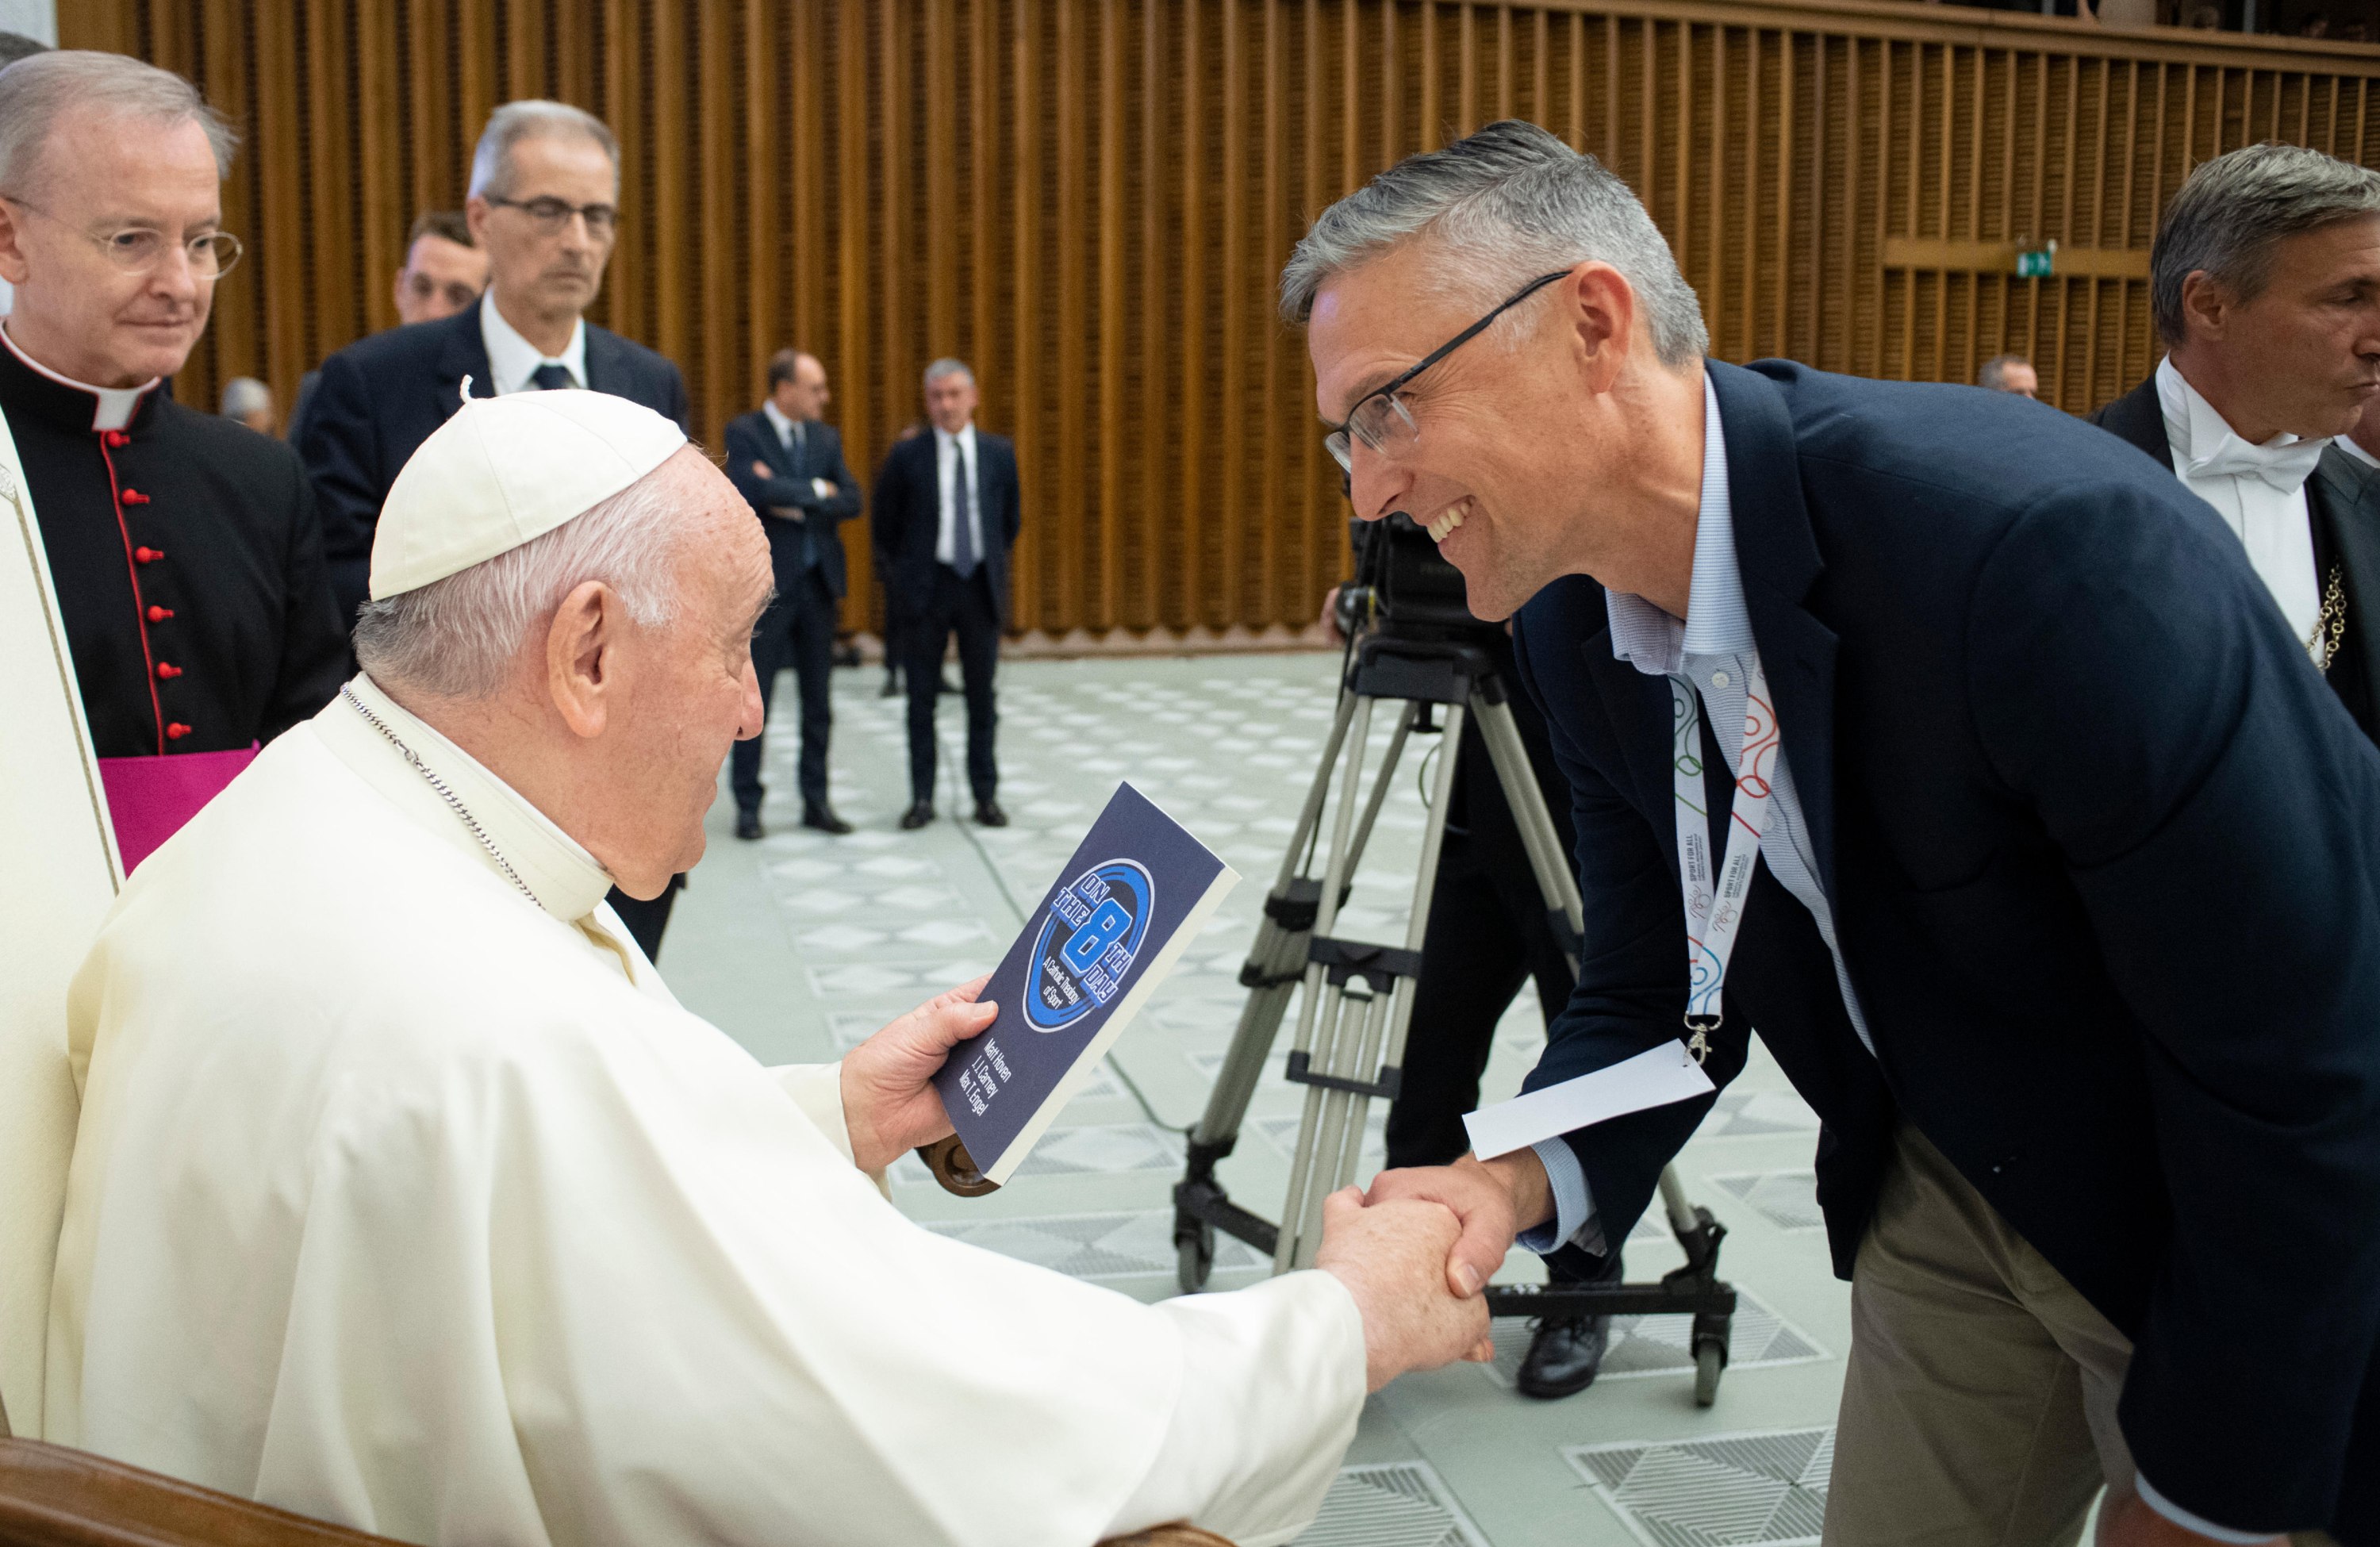 Matt Hoven presents his book to Pope Francis.